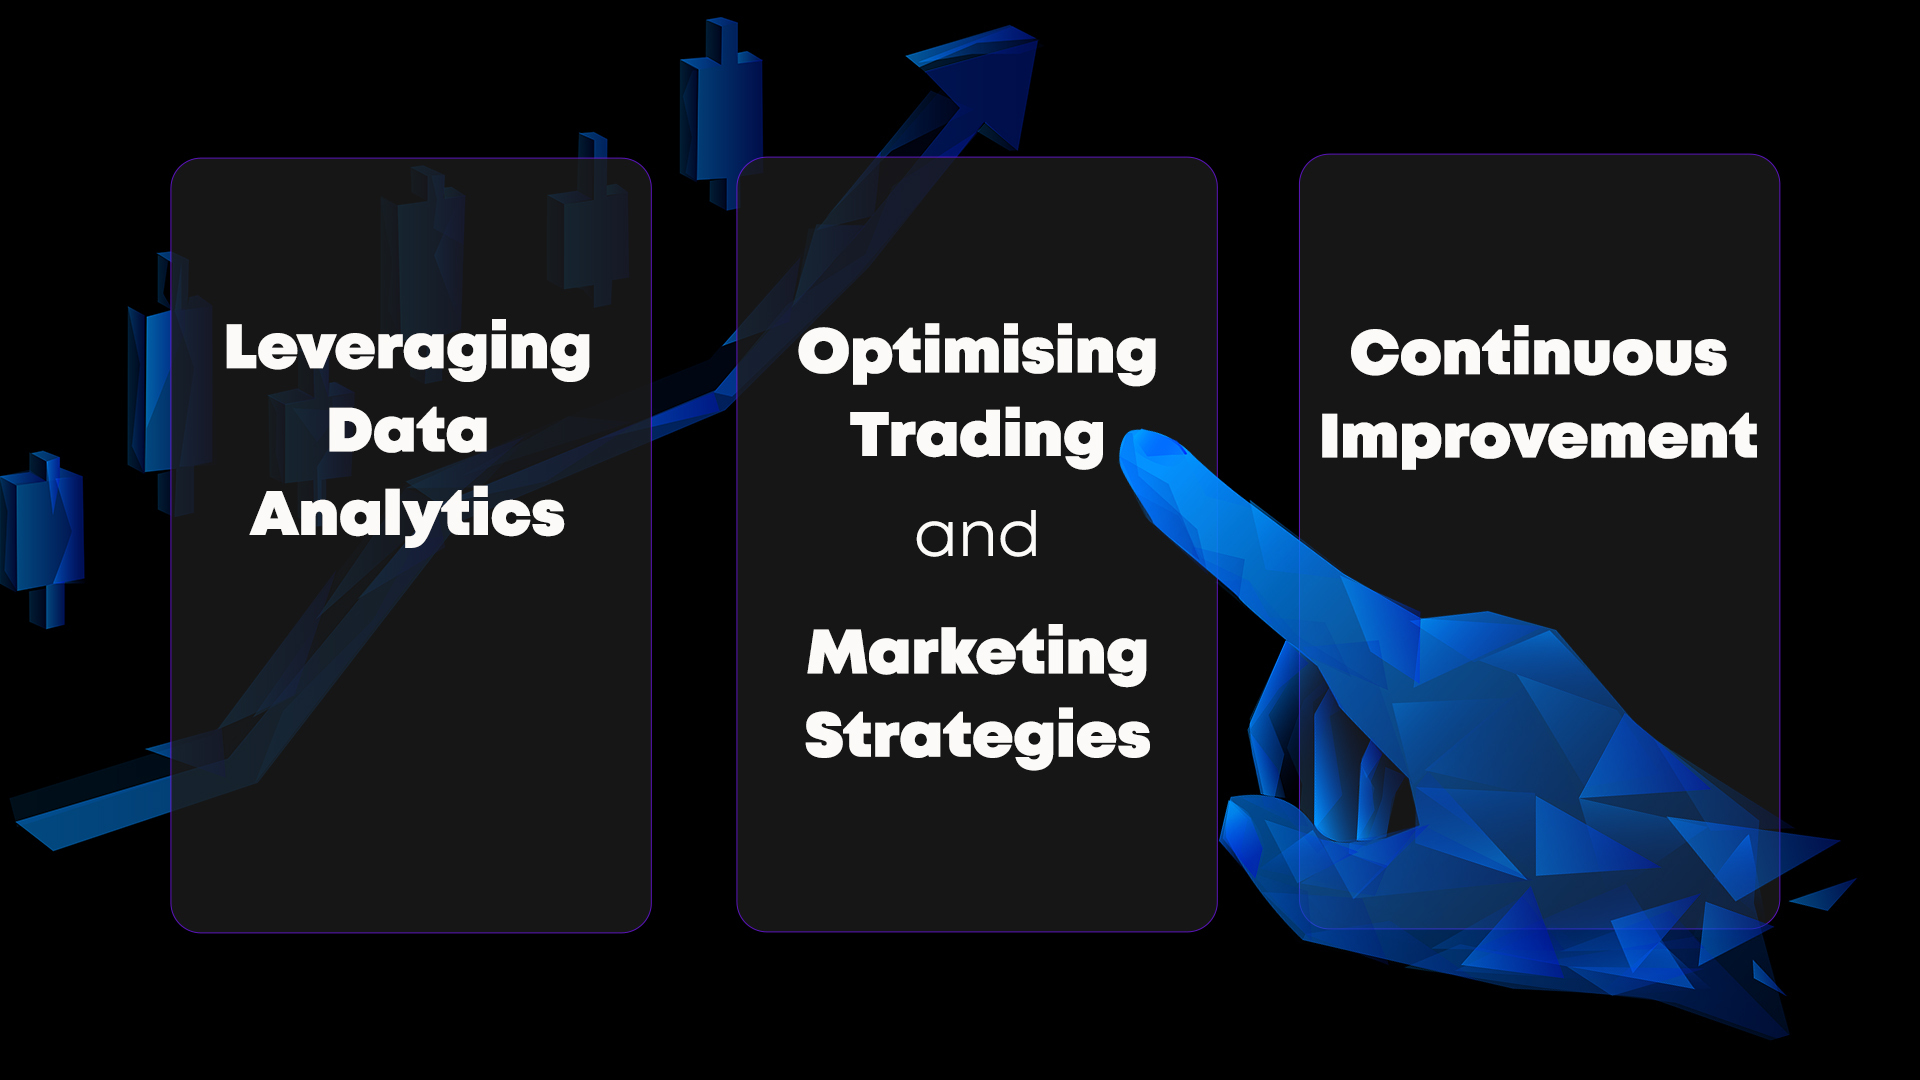 Leveraging data anaylitics, Trading optimization and marketing strategies, Continuous improvement